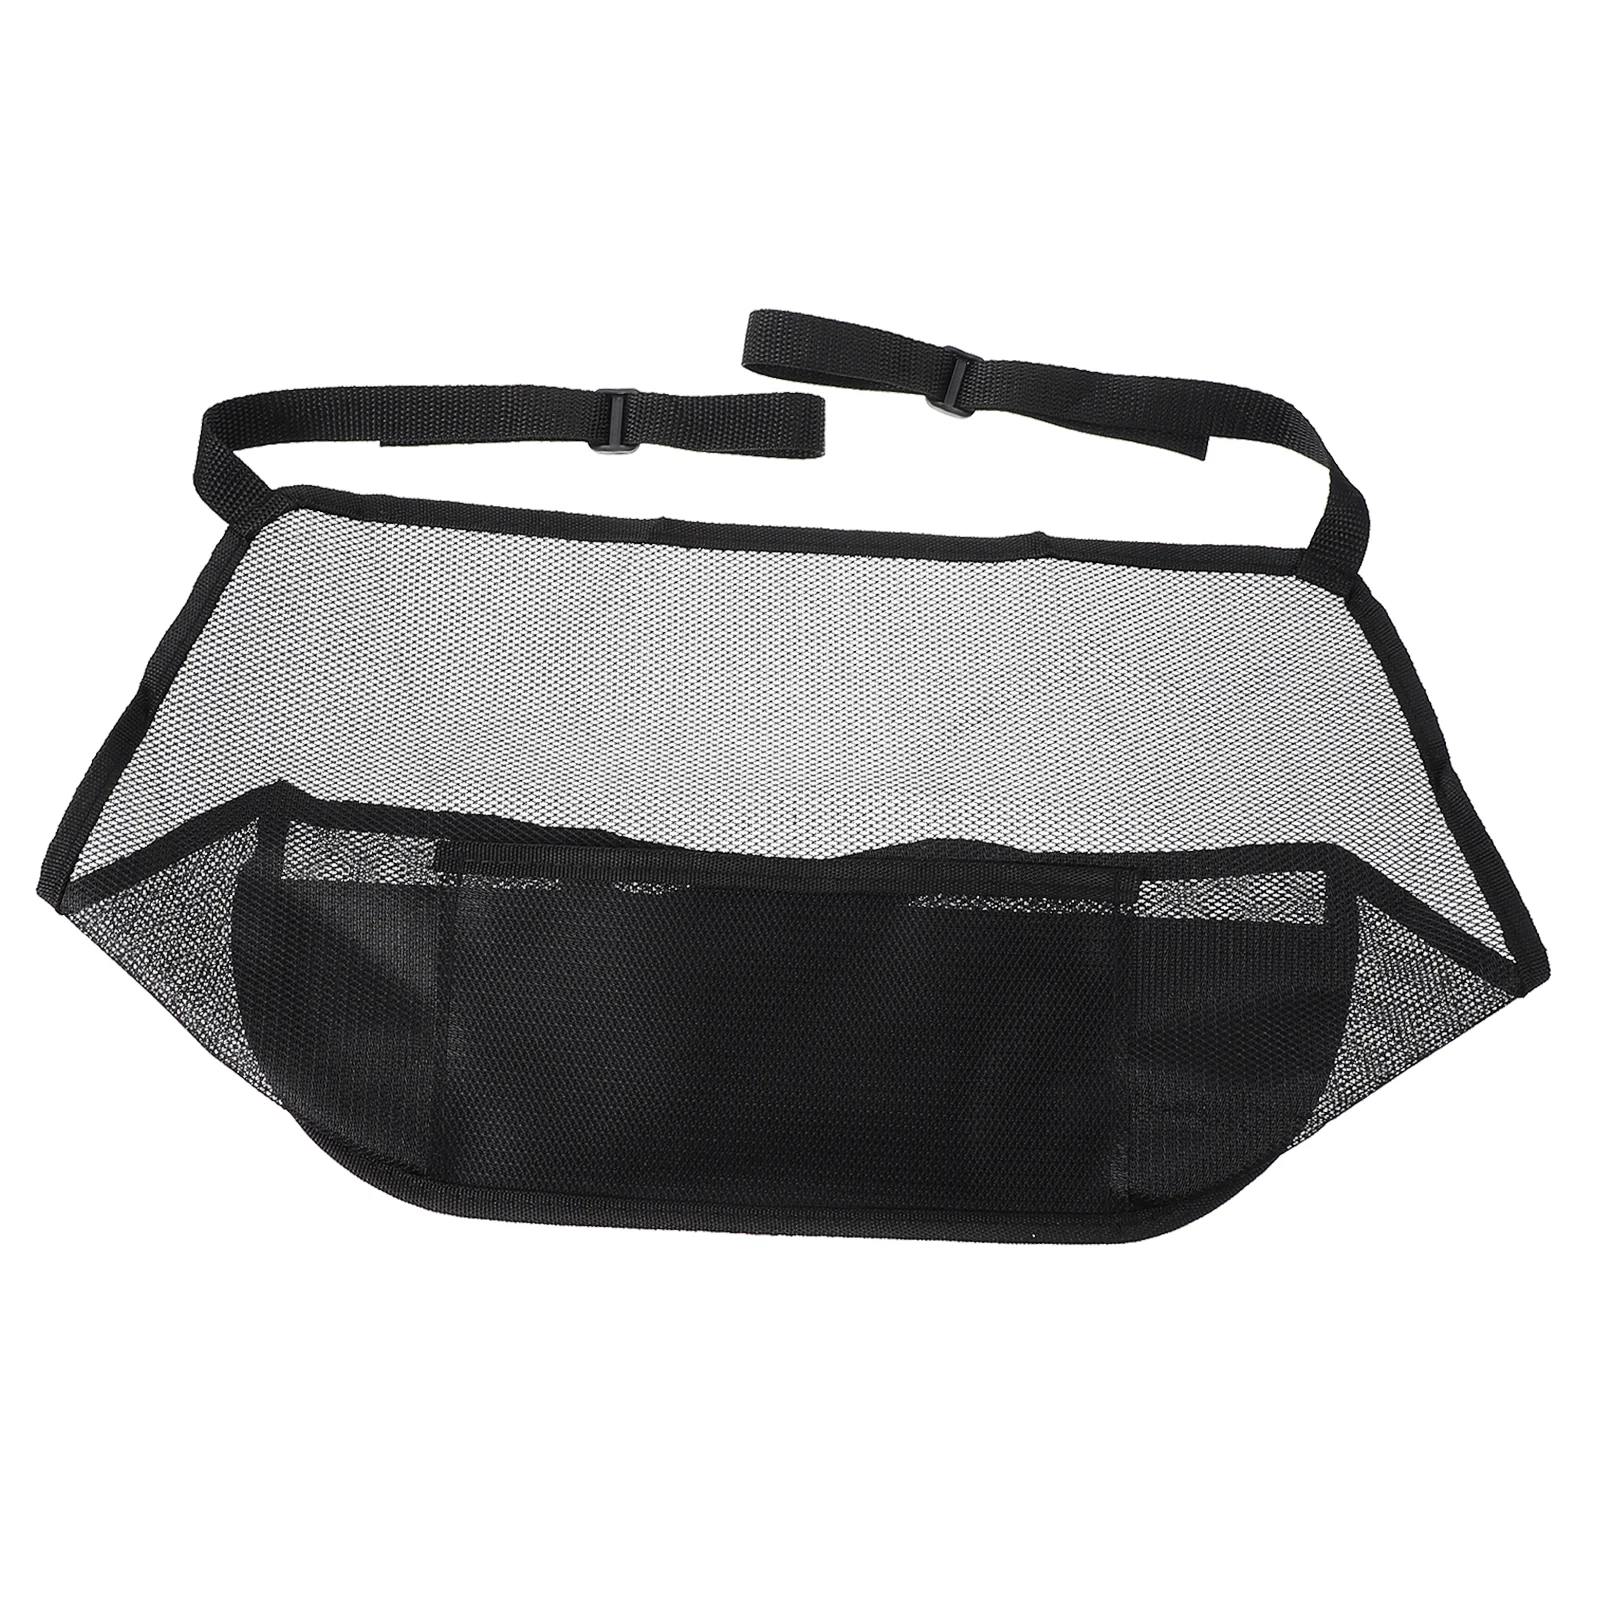 

Car Net Pocket Handbag Holder between Seats Net Purse Holder Mesh Netting Storage Backseat Organizer for Car Vehicles